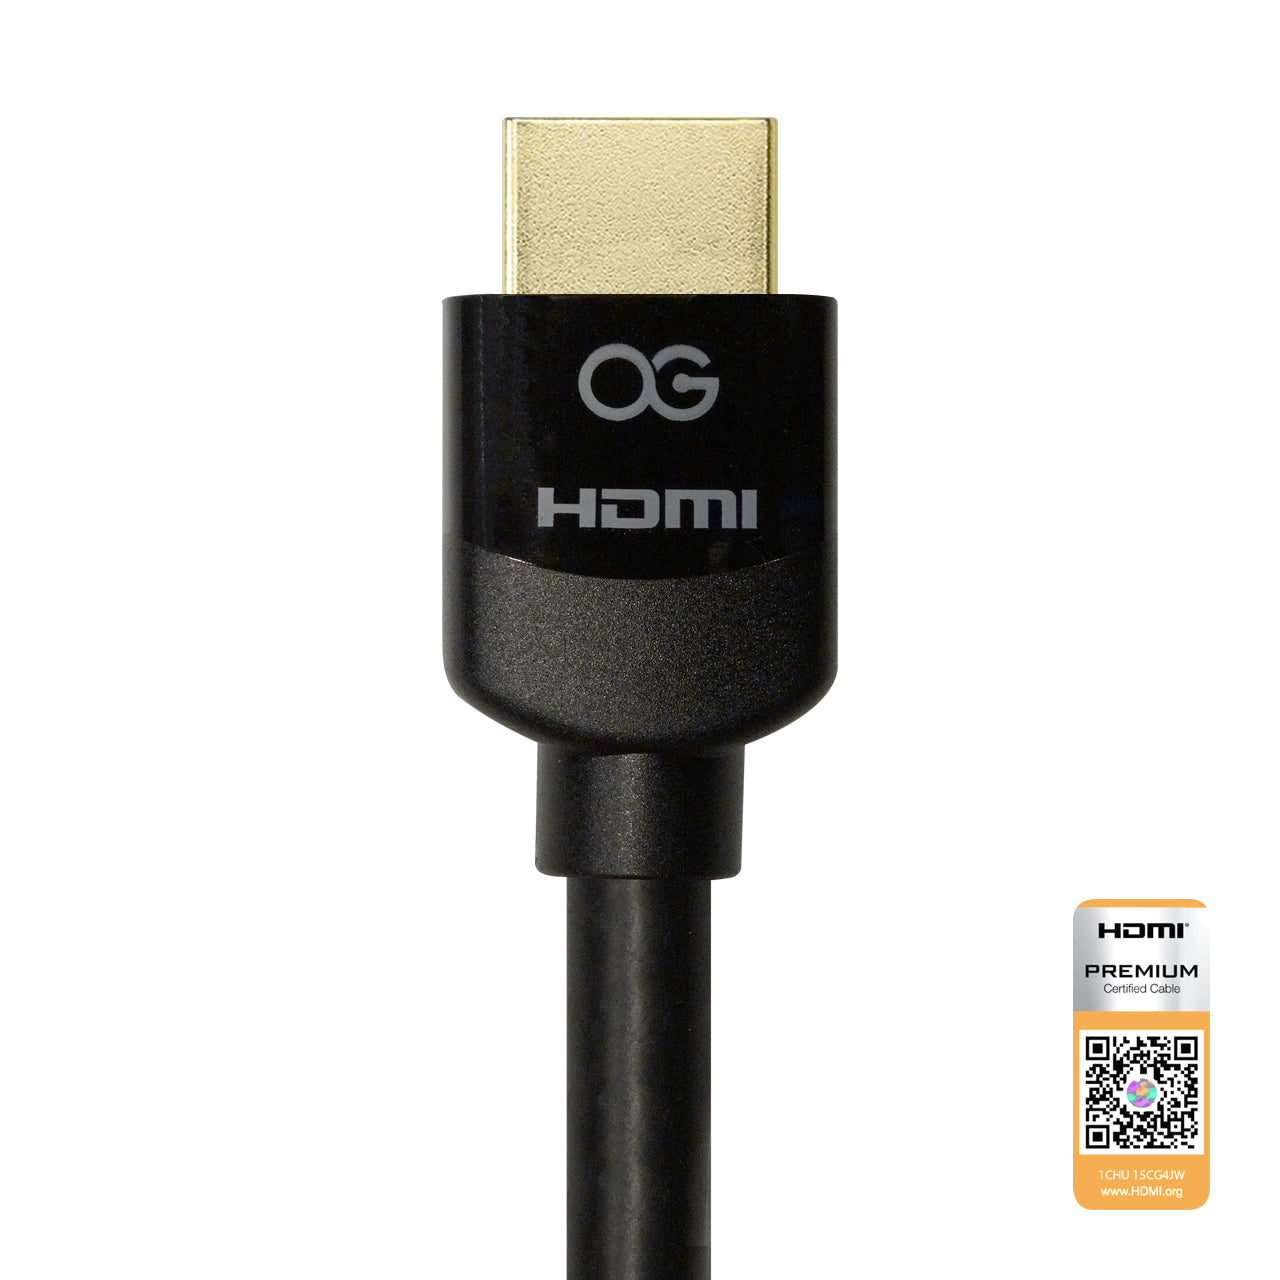 privatliv Bonus Reskyd HDMI Cable with Ethernet | Omnigates.com - omnigates.com